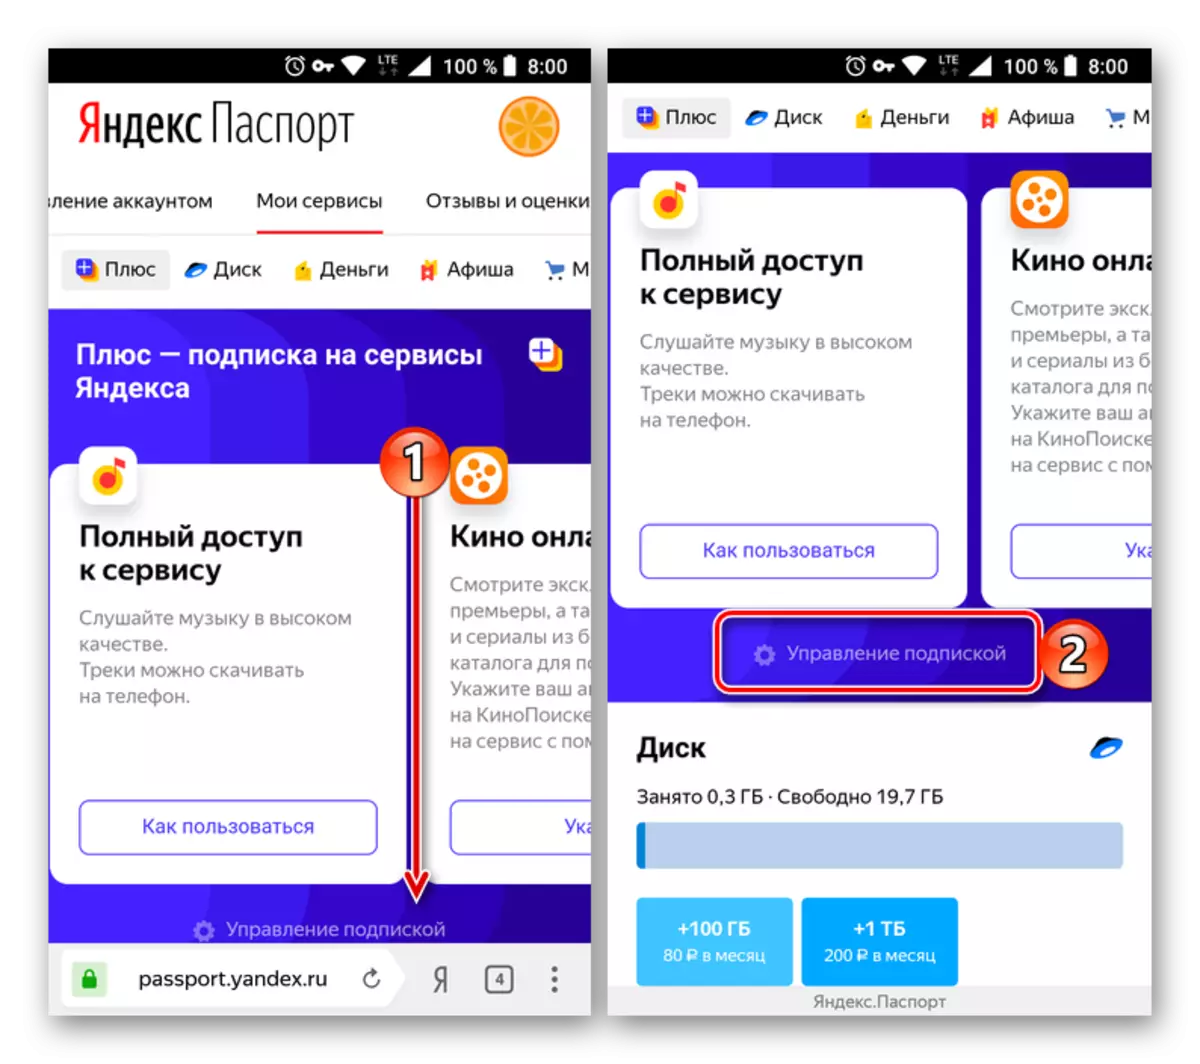 Yandex.pathere വെബ്സൈറ്റിൽ ഒരു സബ്സ്ക്രിപ്ഷൻ കൈകാര്യം ചെയ്യൽ